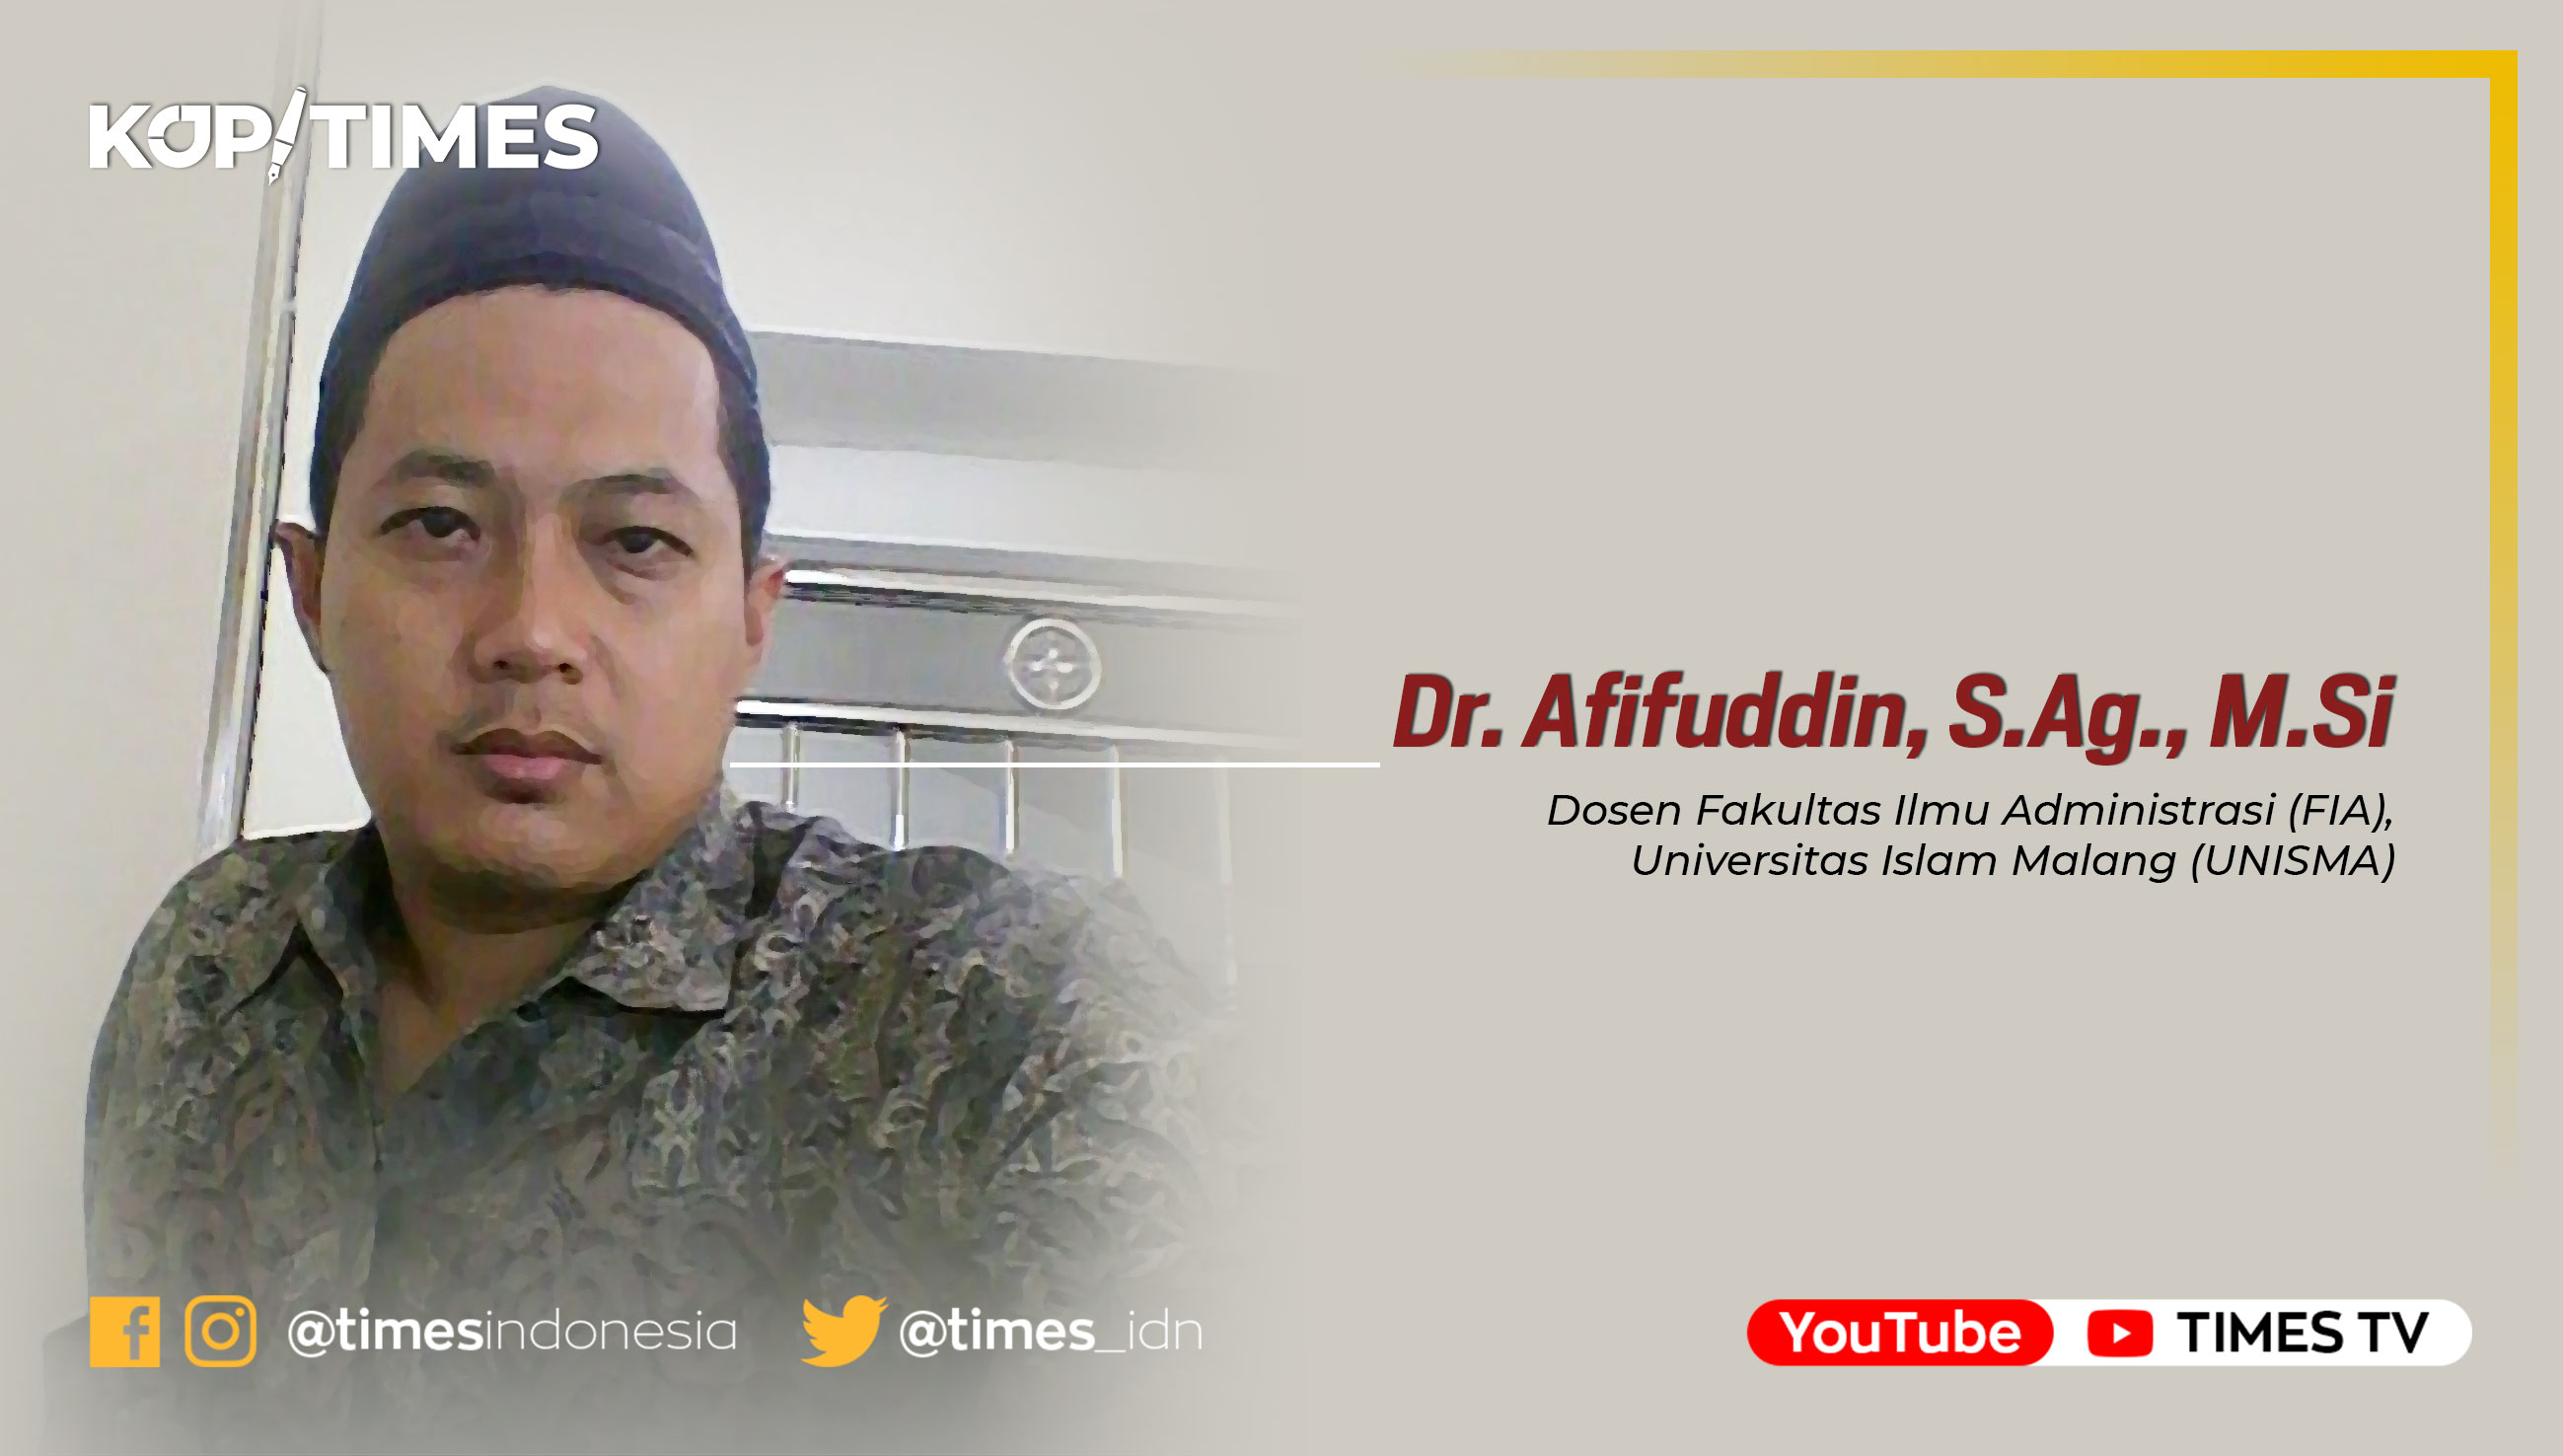 Dr. Afifuddin, S.Ag., M.Si, Dosen Fakultas Ilmu Administrasi (FIA), Universitas Islam Malang (UNISMA)